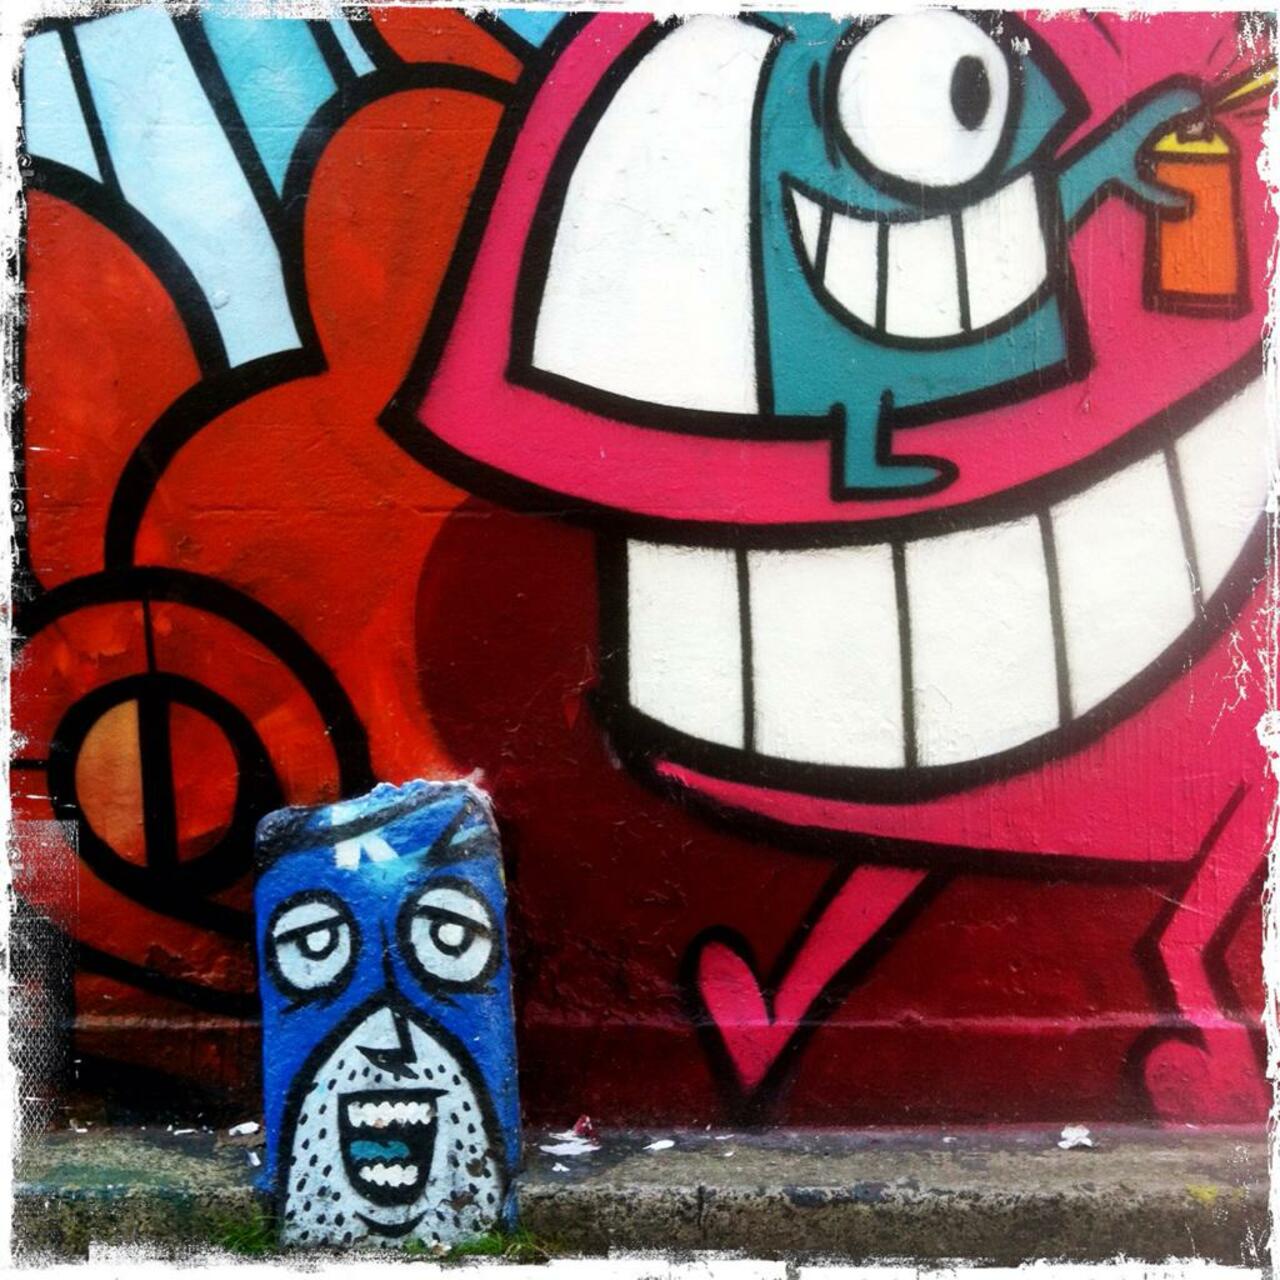 RT @BrickLaneArt: Smiles all round - @kristiandouglas & @PezBarcelona work in Star Yard, Brick Lane #art #streetart #graffiti http://t.co/E1hqqBwEt8